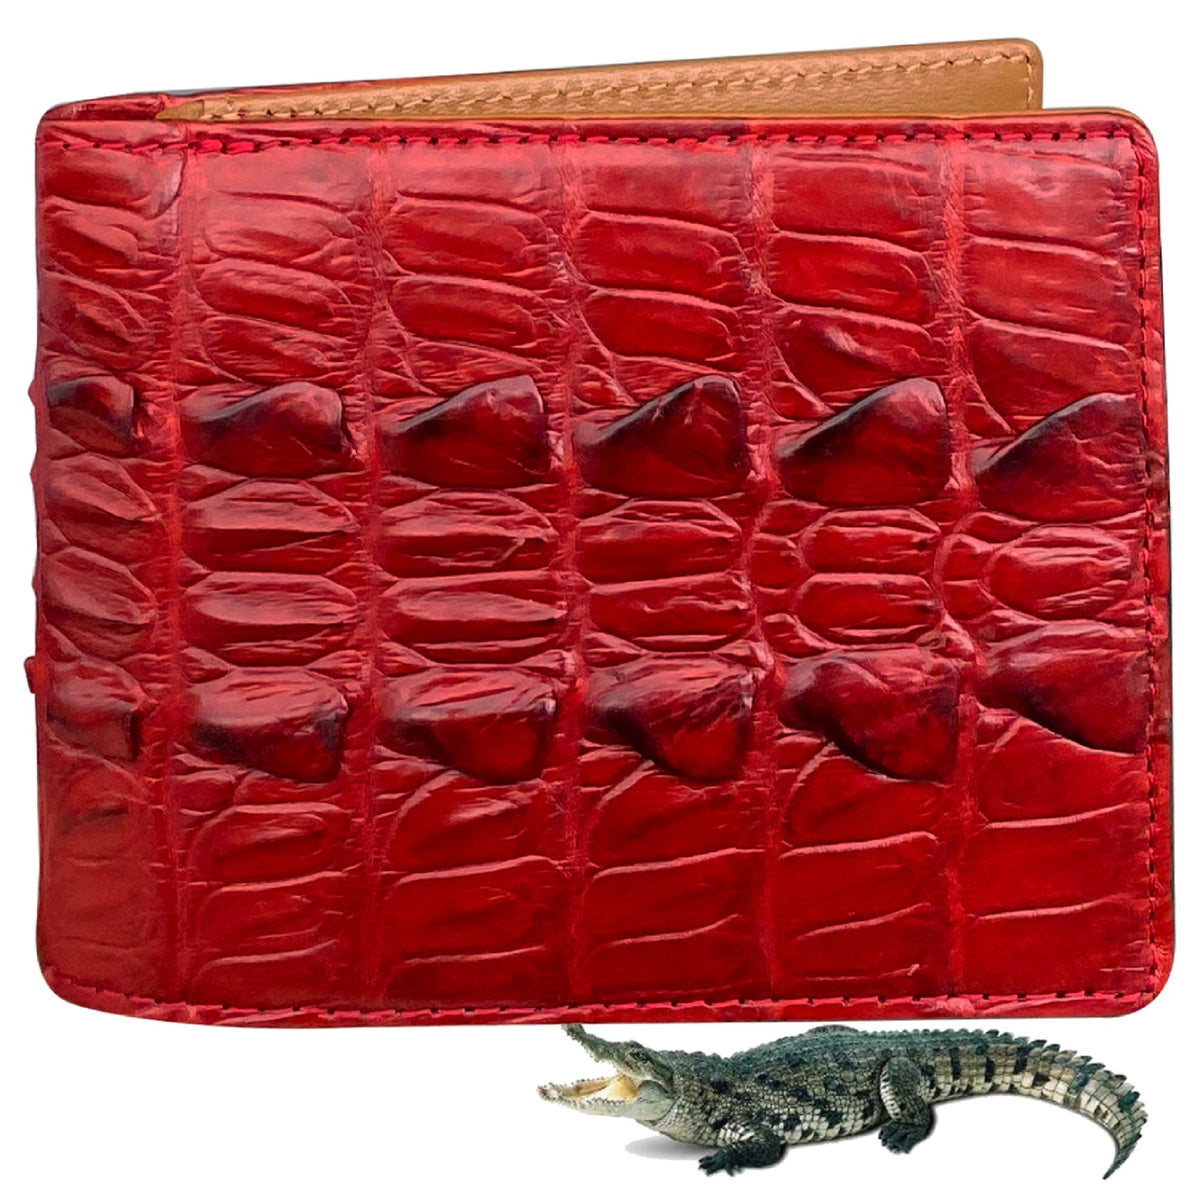 Blue and Red “President” Full Alligator Wallet